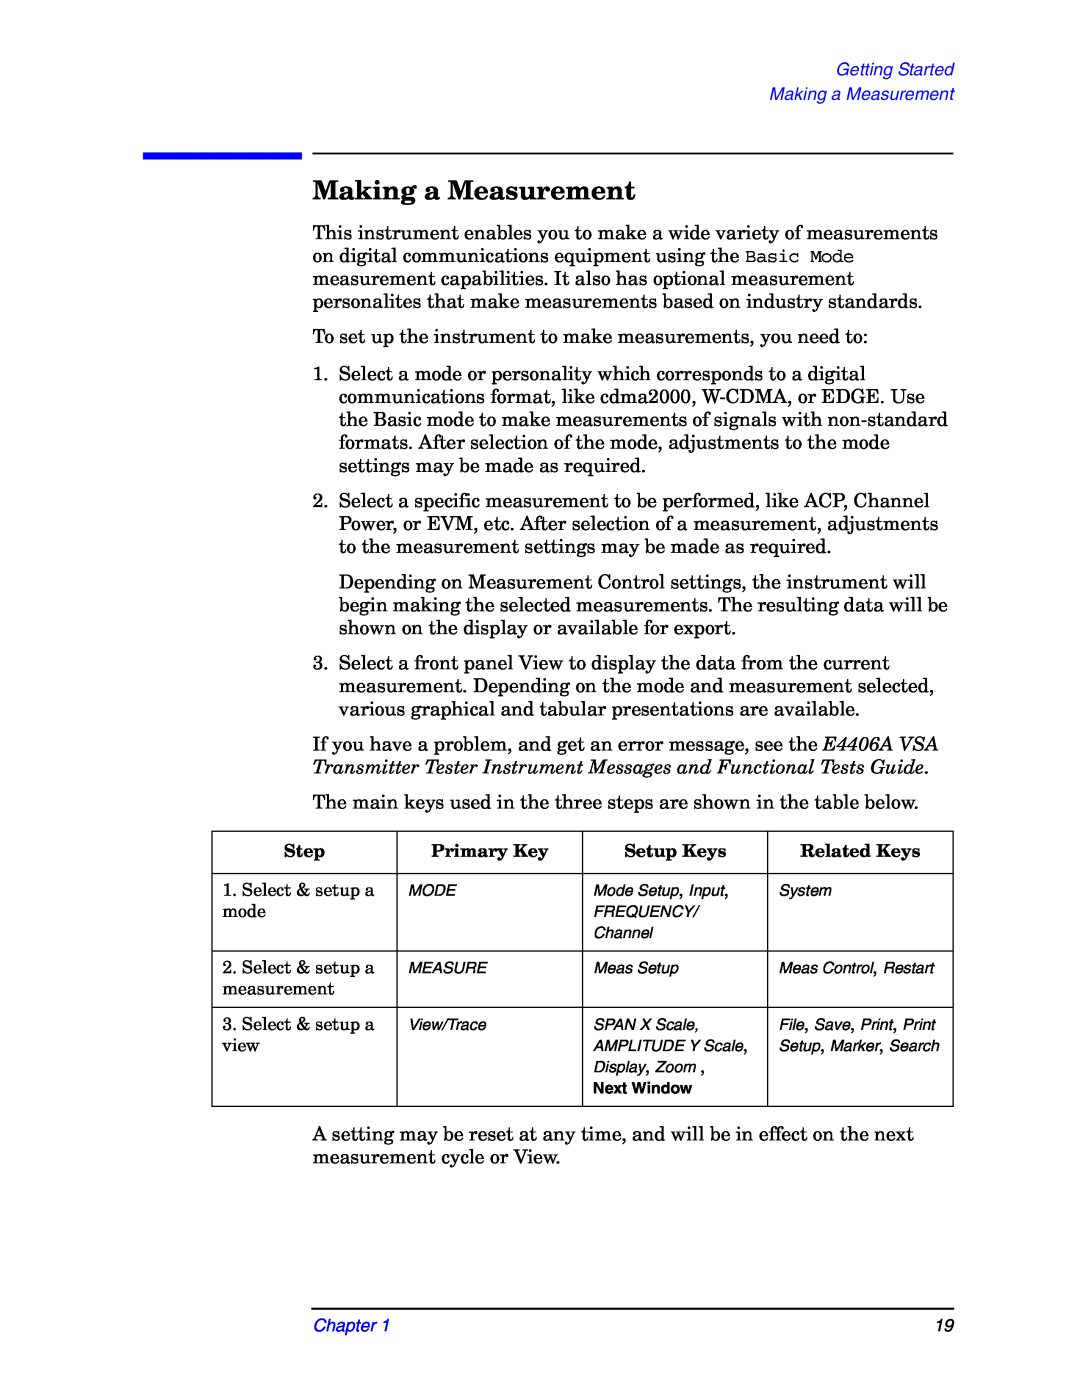 Agilent Technologies E4406A manual Making a Measurement, Step, Primary Key, Setup Keys, Related Keys 